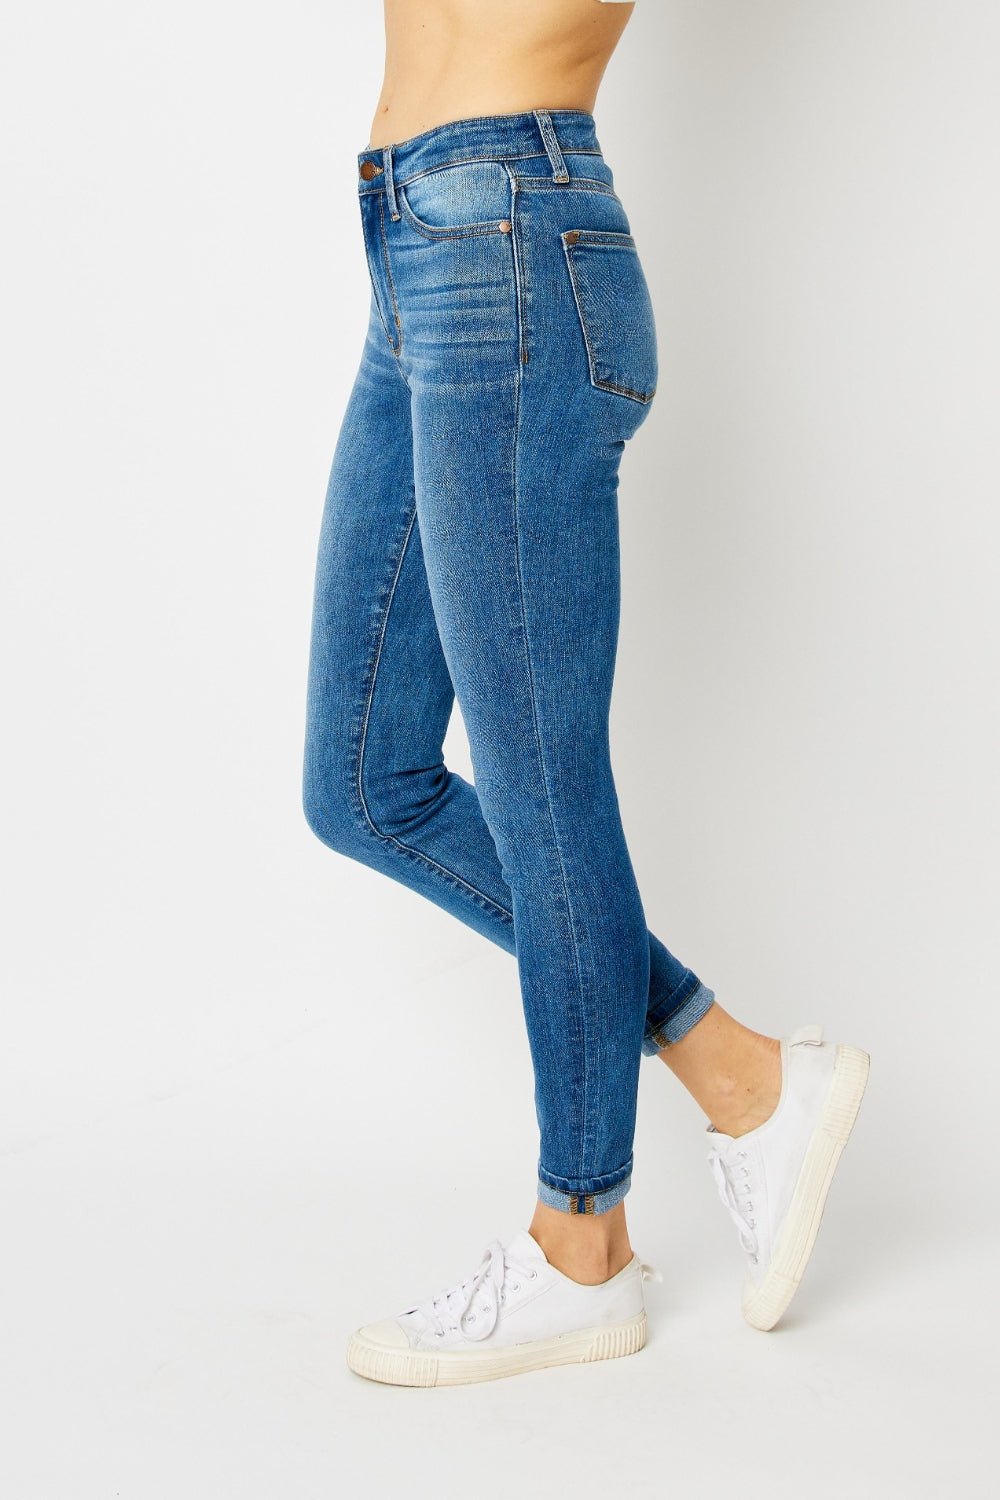 Judy Blue Cuffed Hem Skinny Jeans - My Threaded Apparel | Online Women's Boutique - denim jeans